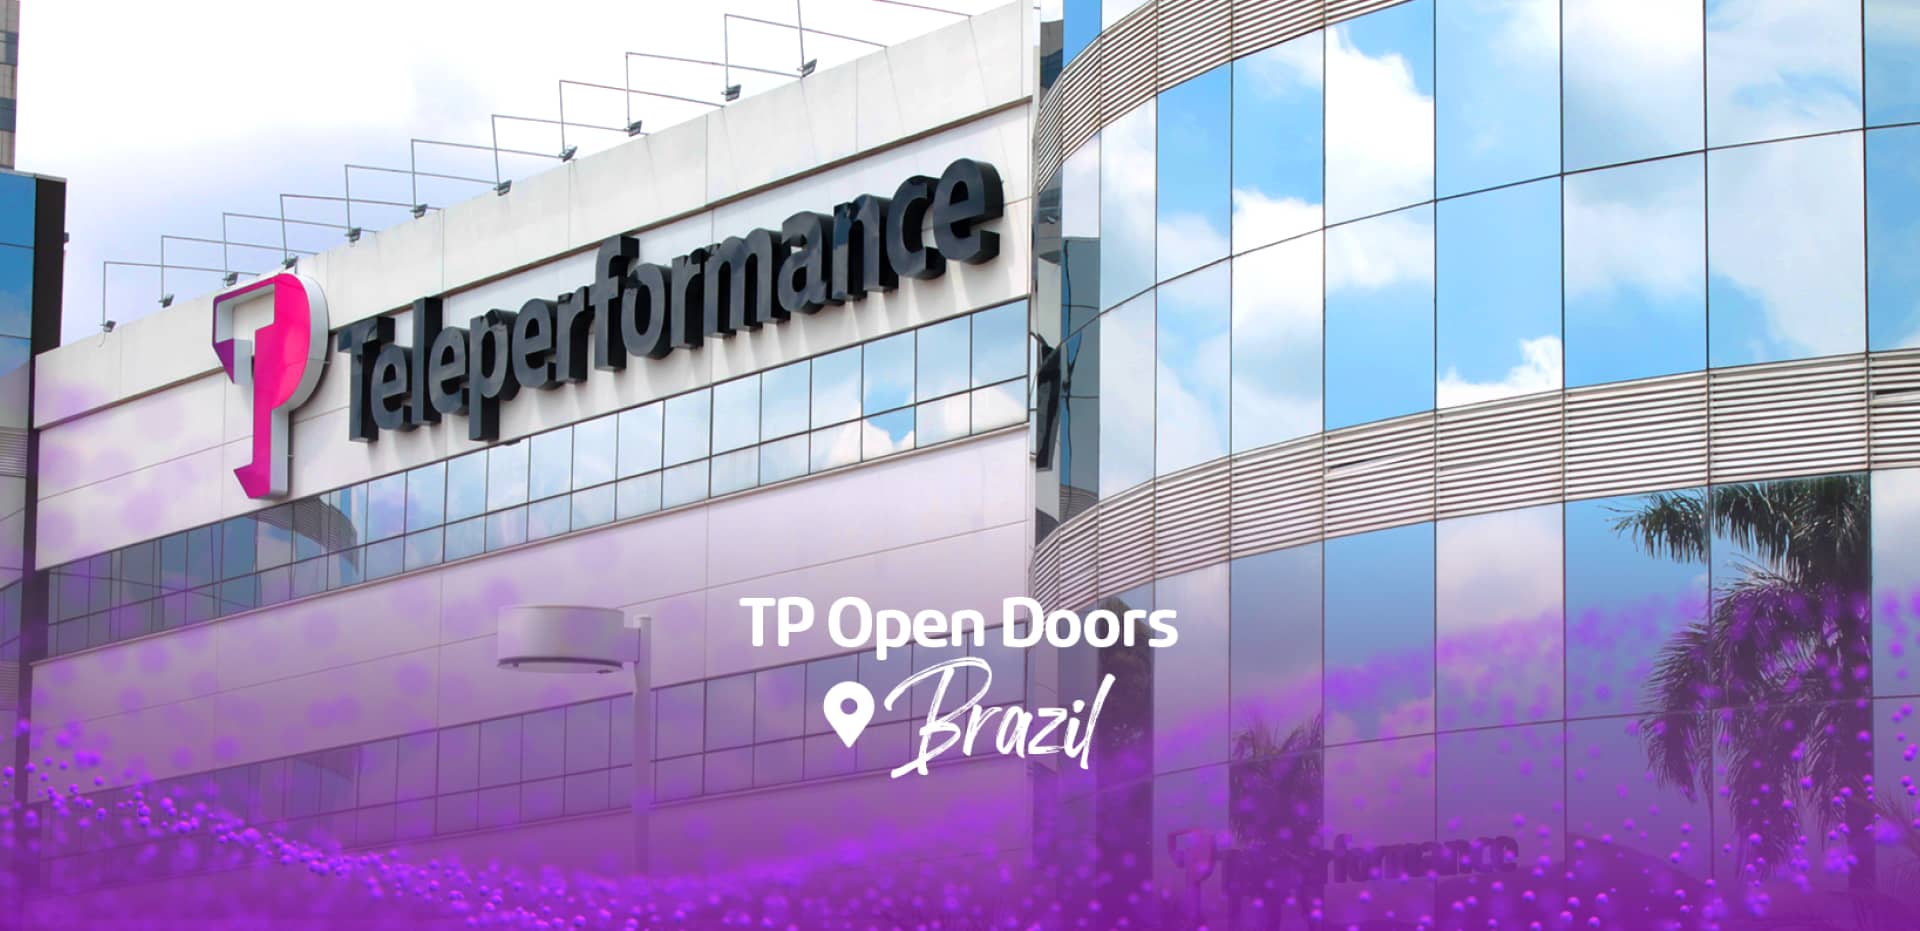 TP Open Doors Brazil